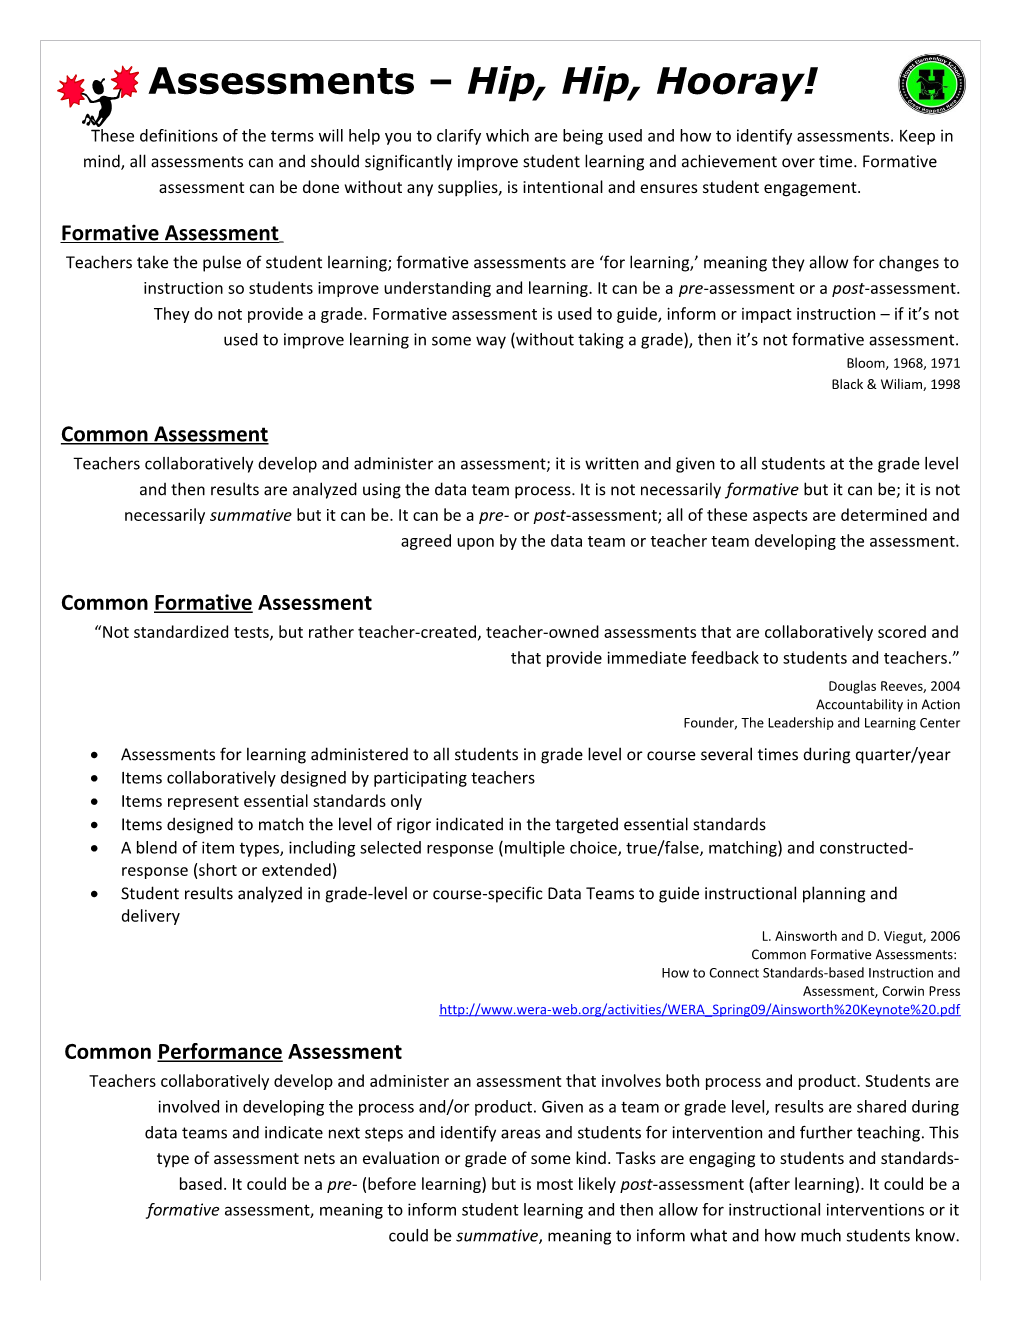 Assessment Definitions - Key Sheet